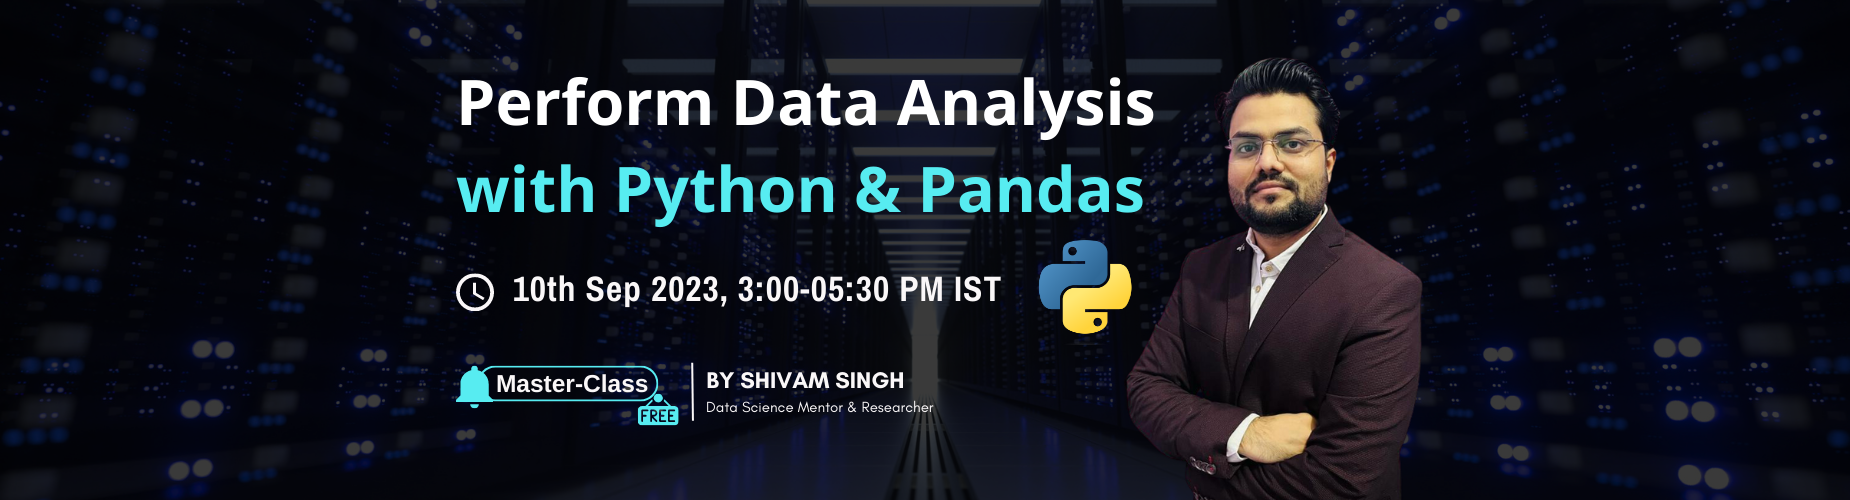 Data Analysis with Python & Pandas